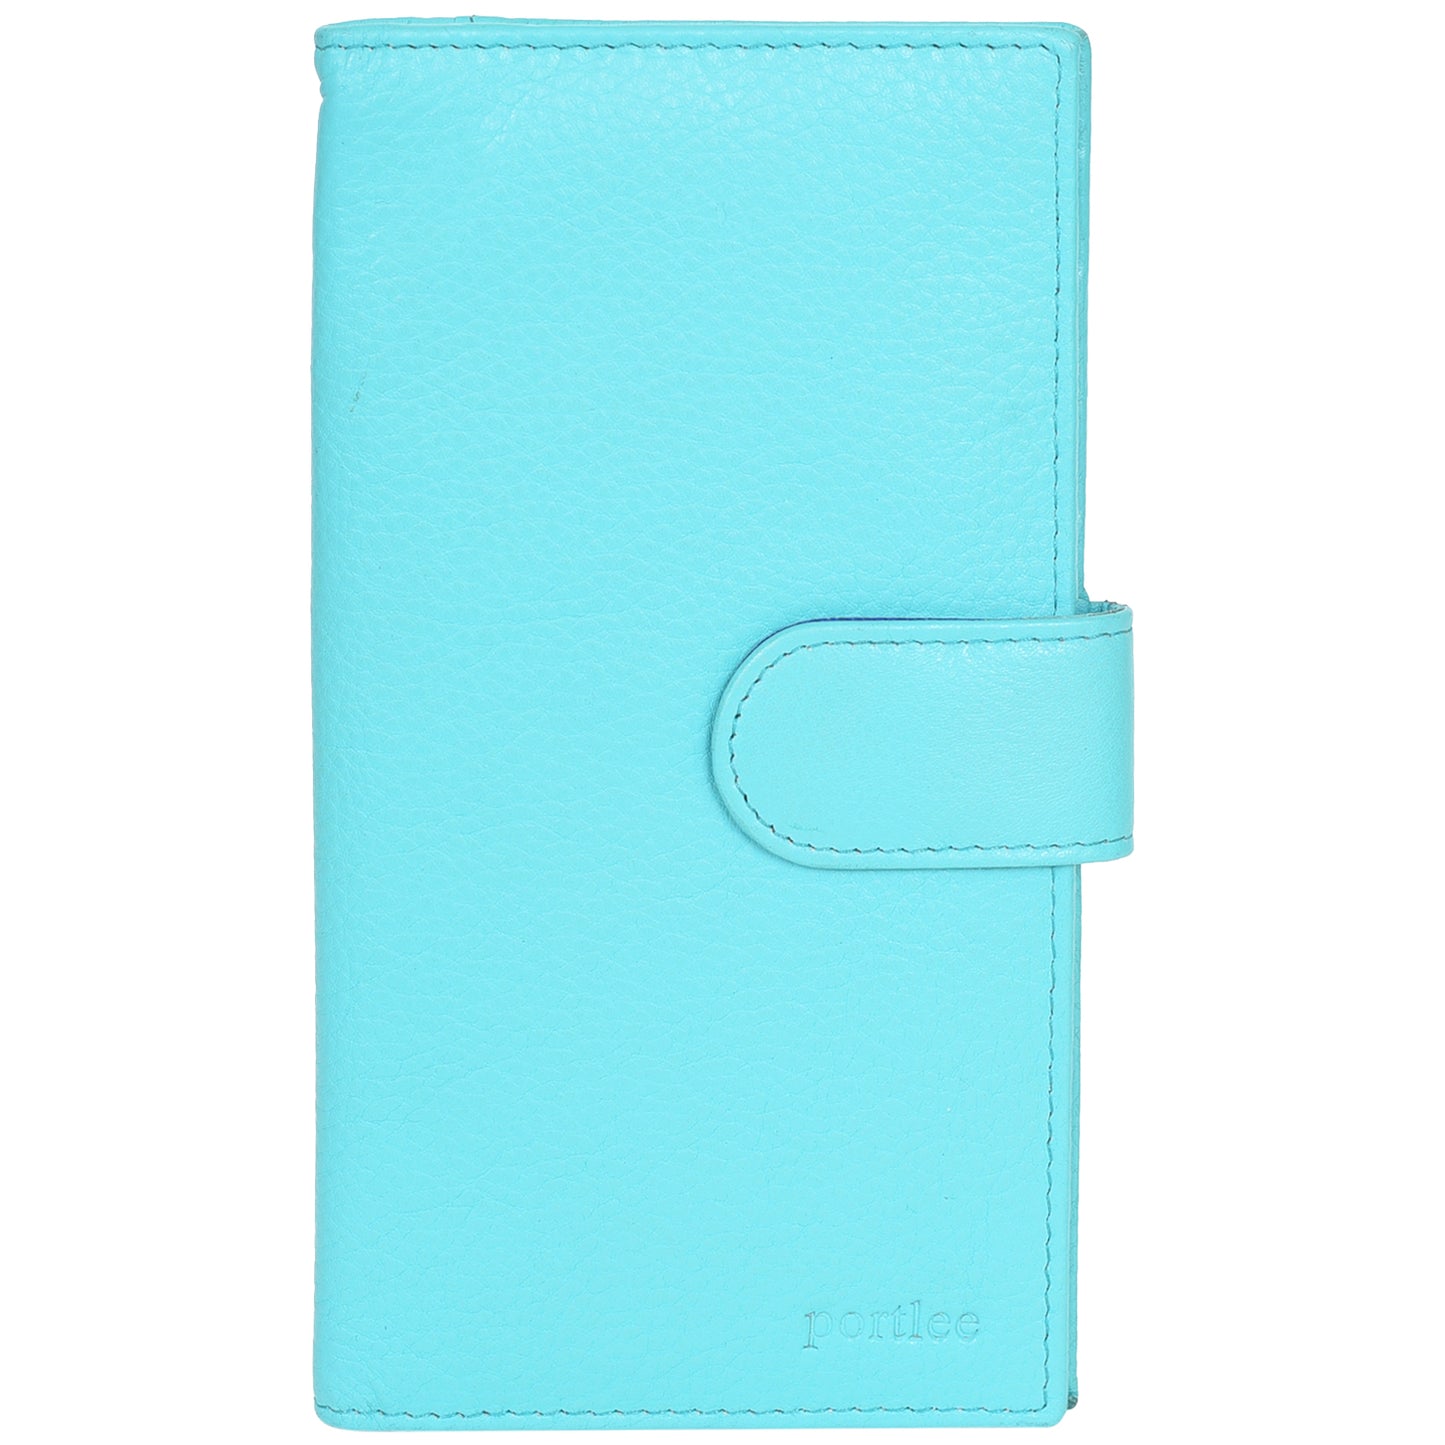 Portlee Leather Women's Card & Cash Holder Wallet, Sky Blue / Turquoise - Portlee